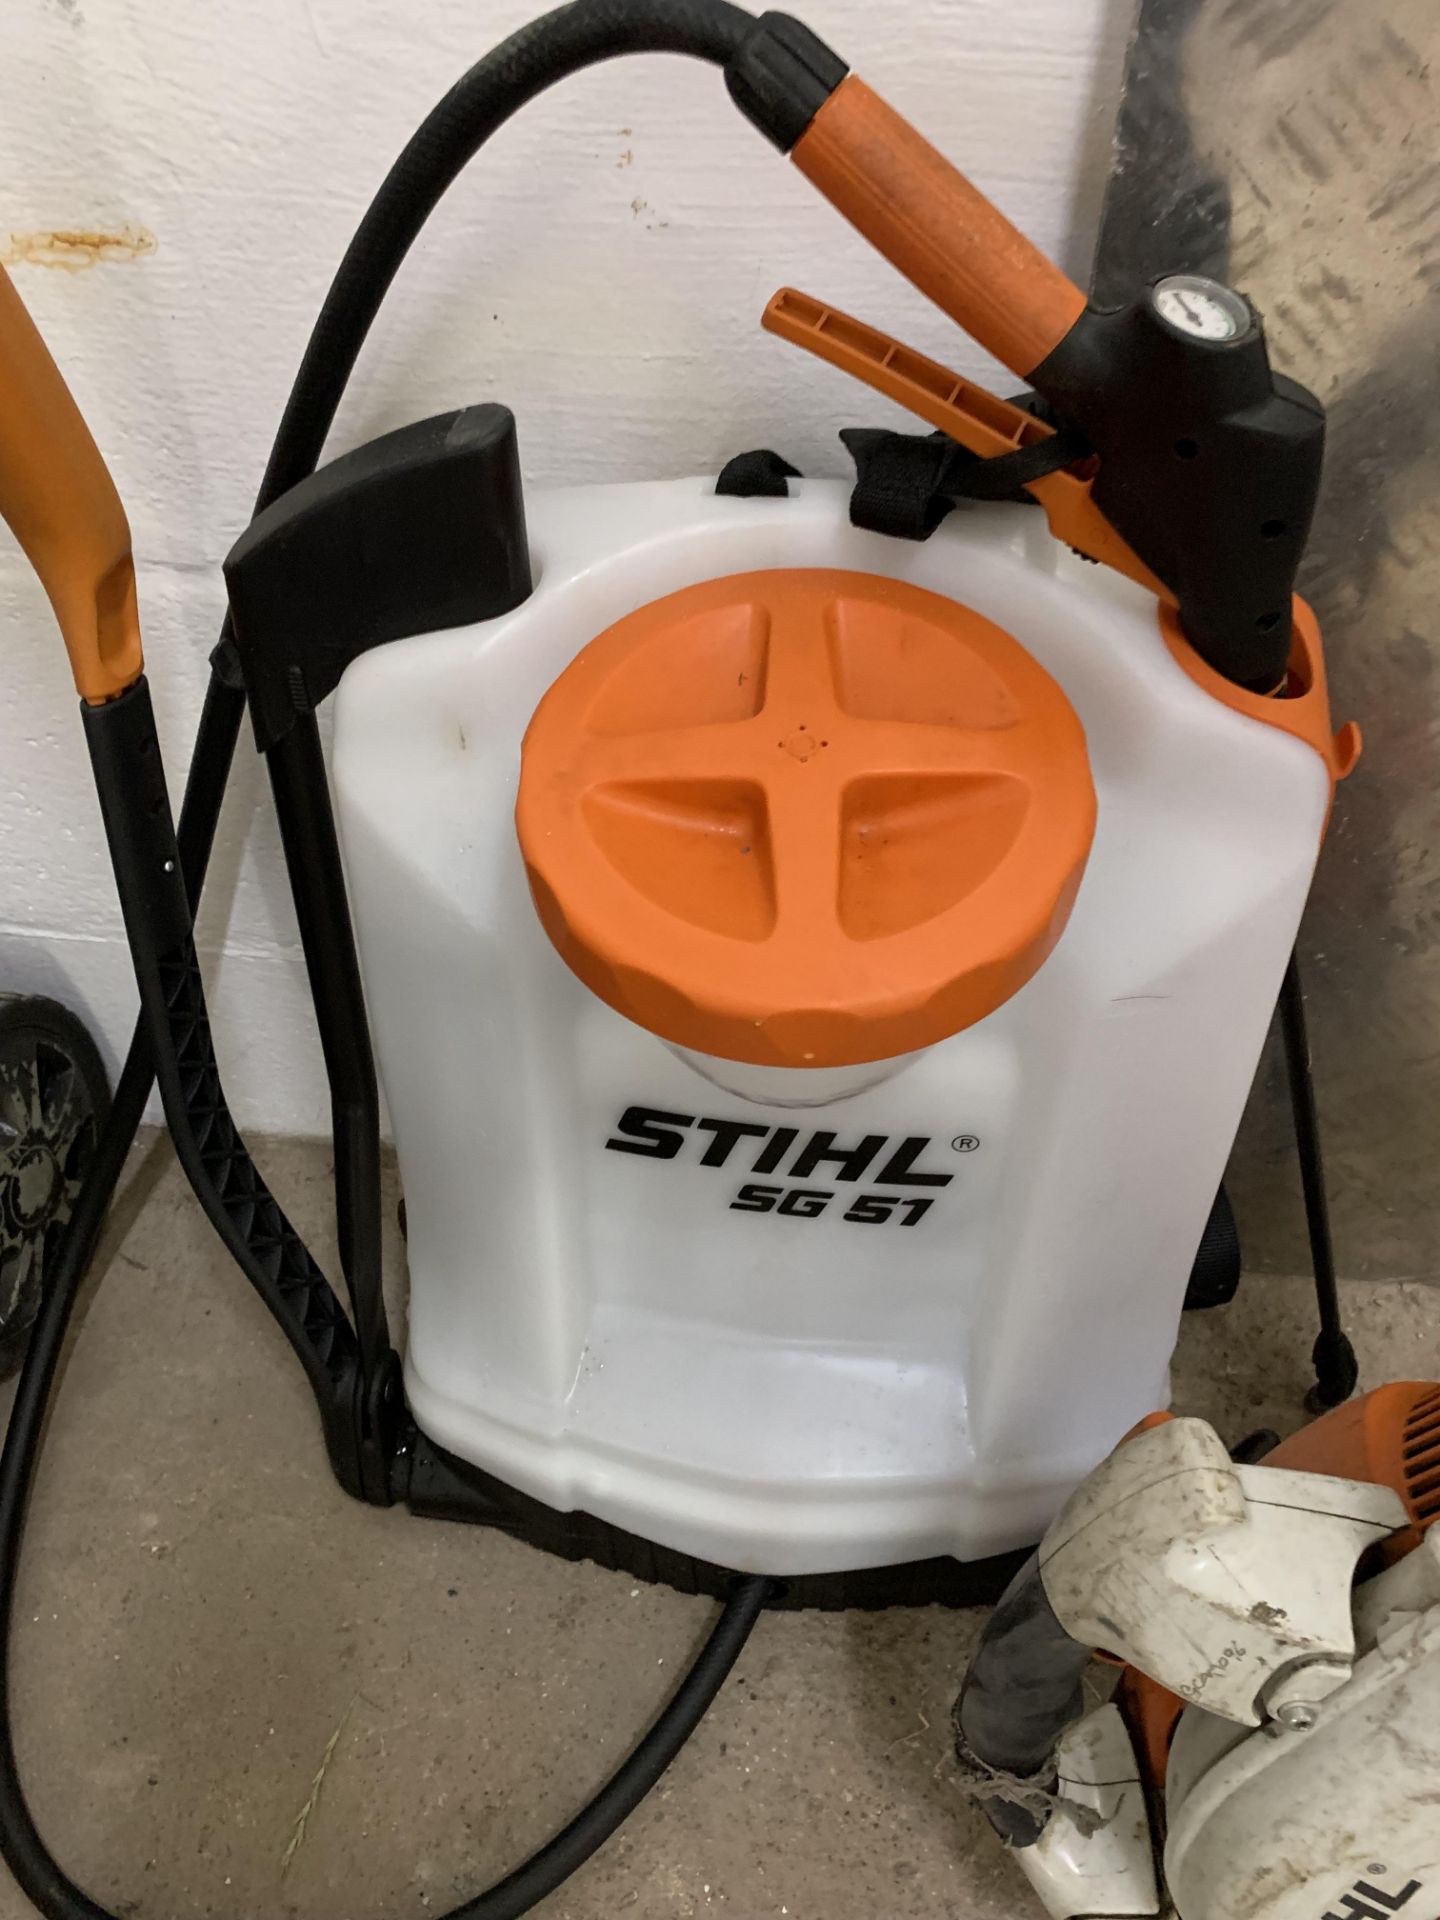 Stihl petrol leaf blower and backpack sprayer SG 51 - Image 3 of 3